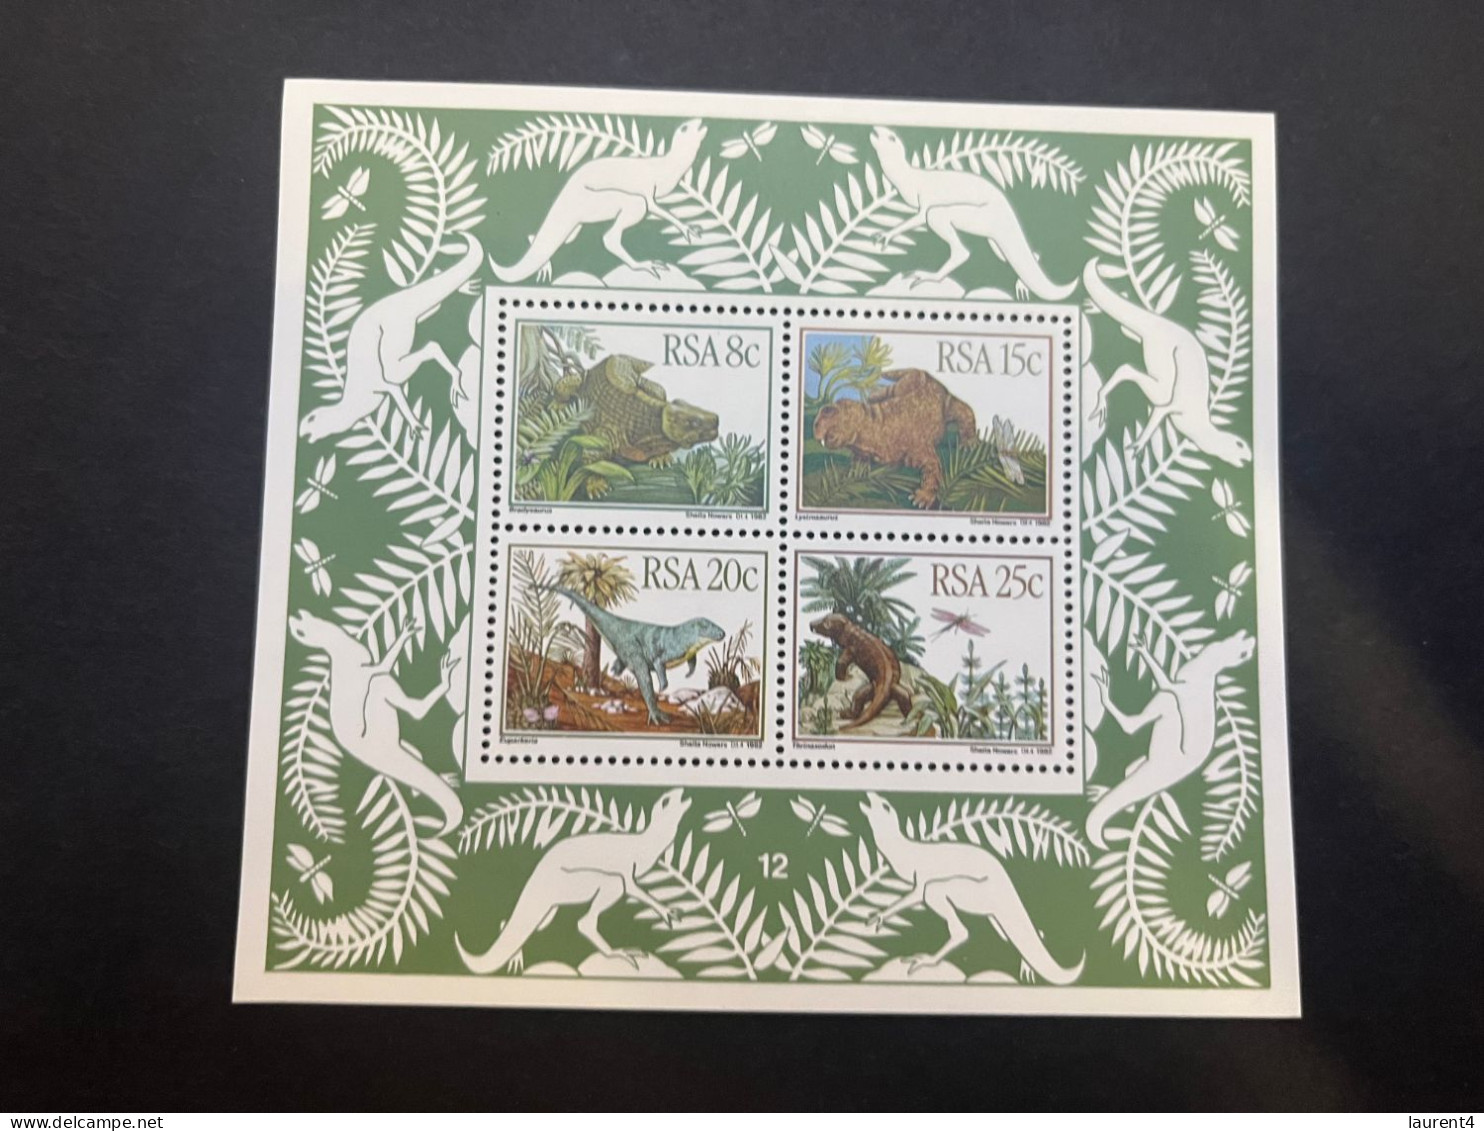 13-5-2024 (stamp) Mint (neuve) Mini-sheet - RSA South Africa - Dinosaurs - Vor- U. Frühgeschichte